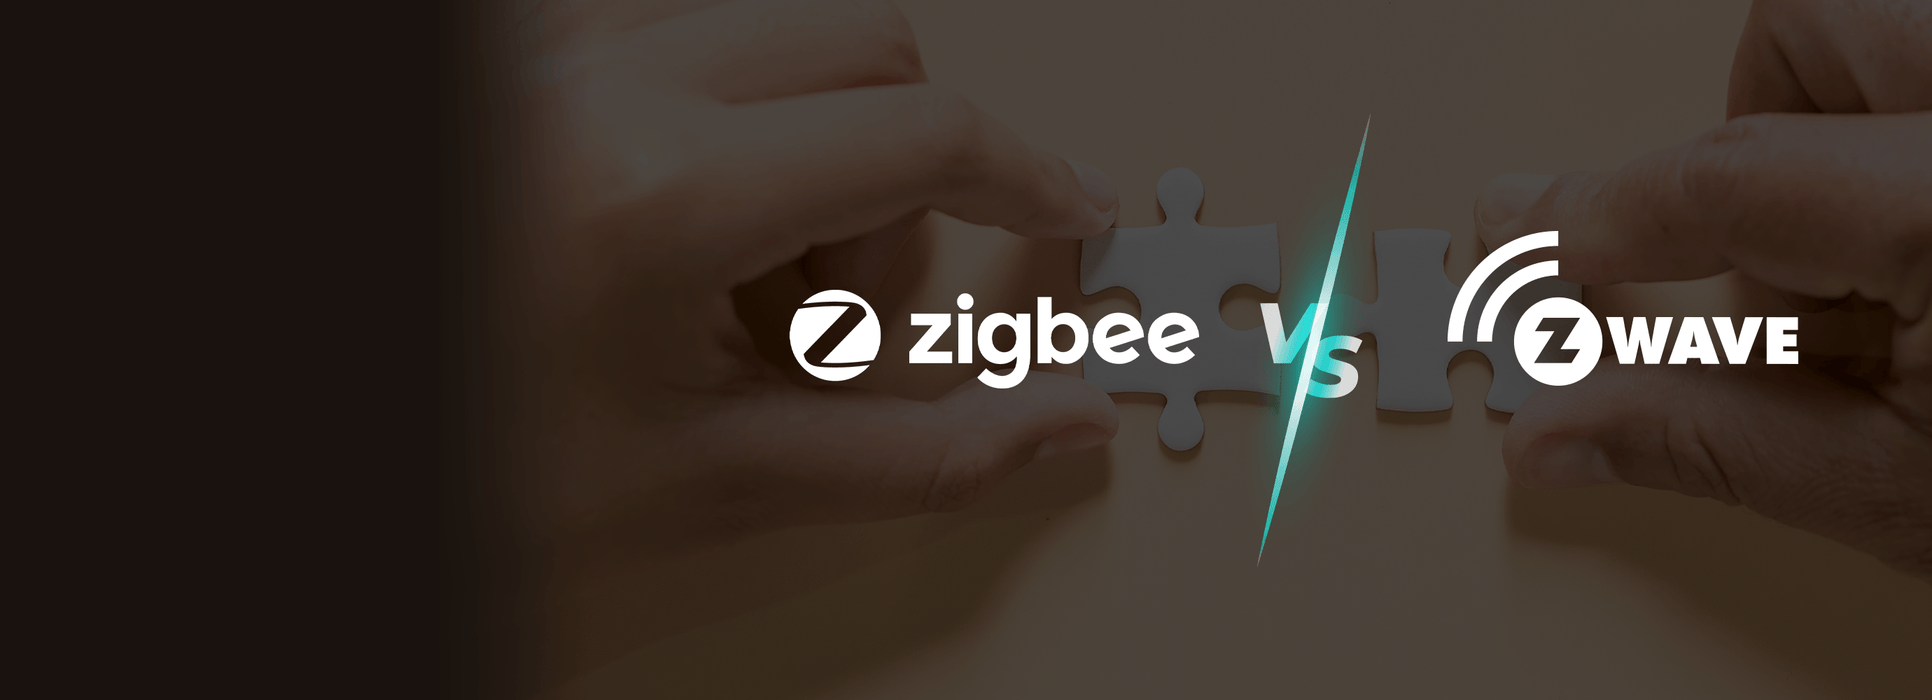 Zigbee vs dispositifs d'ondes z